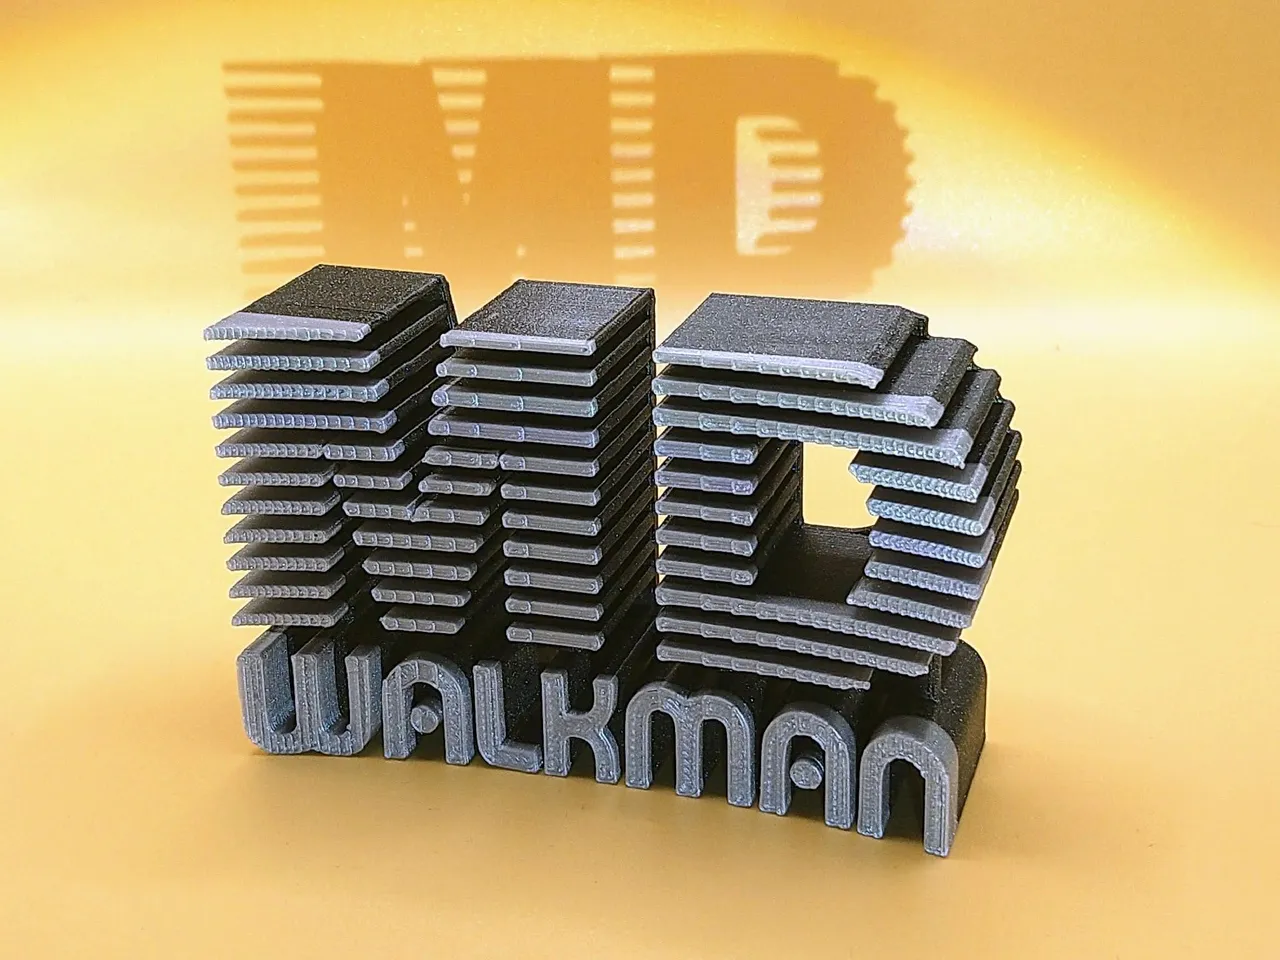 Classic Walkman retro logo - Classic Walkman - Posters and Art Prints |  TeePublic